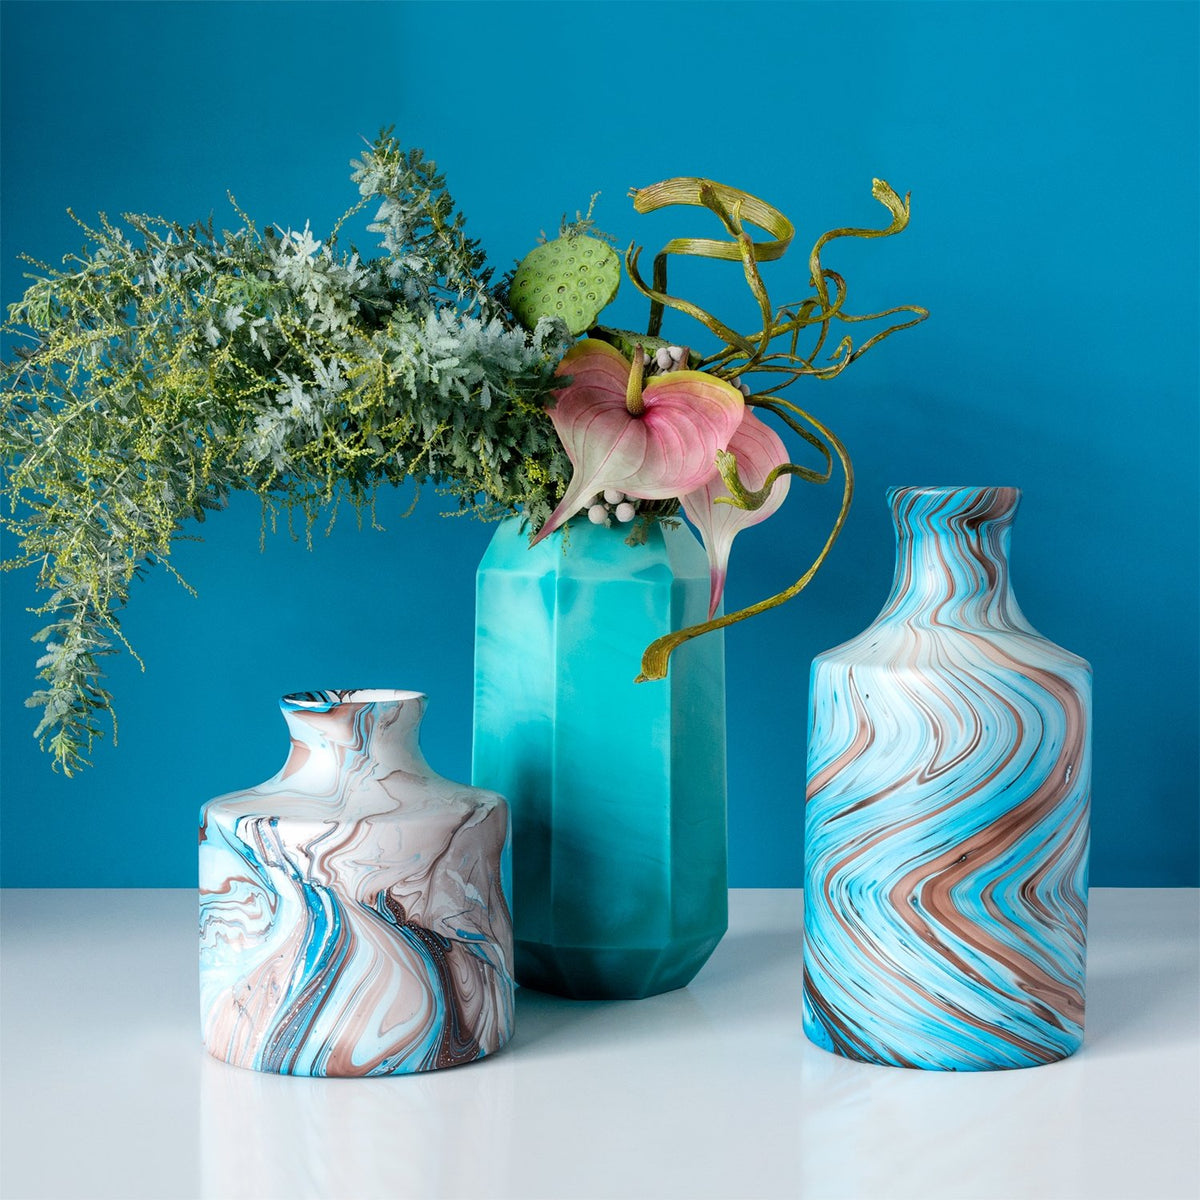 Aqua Glass Vase